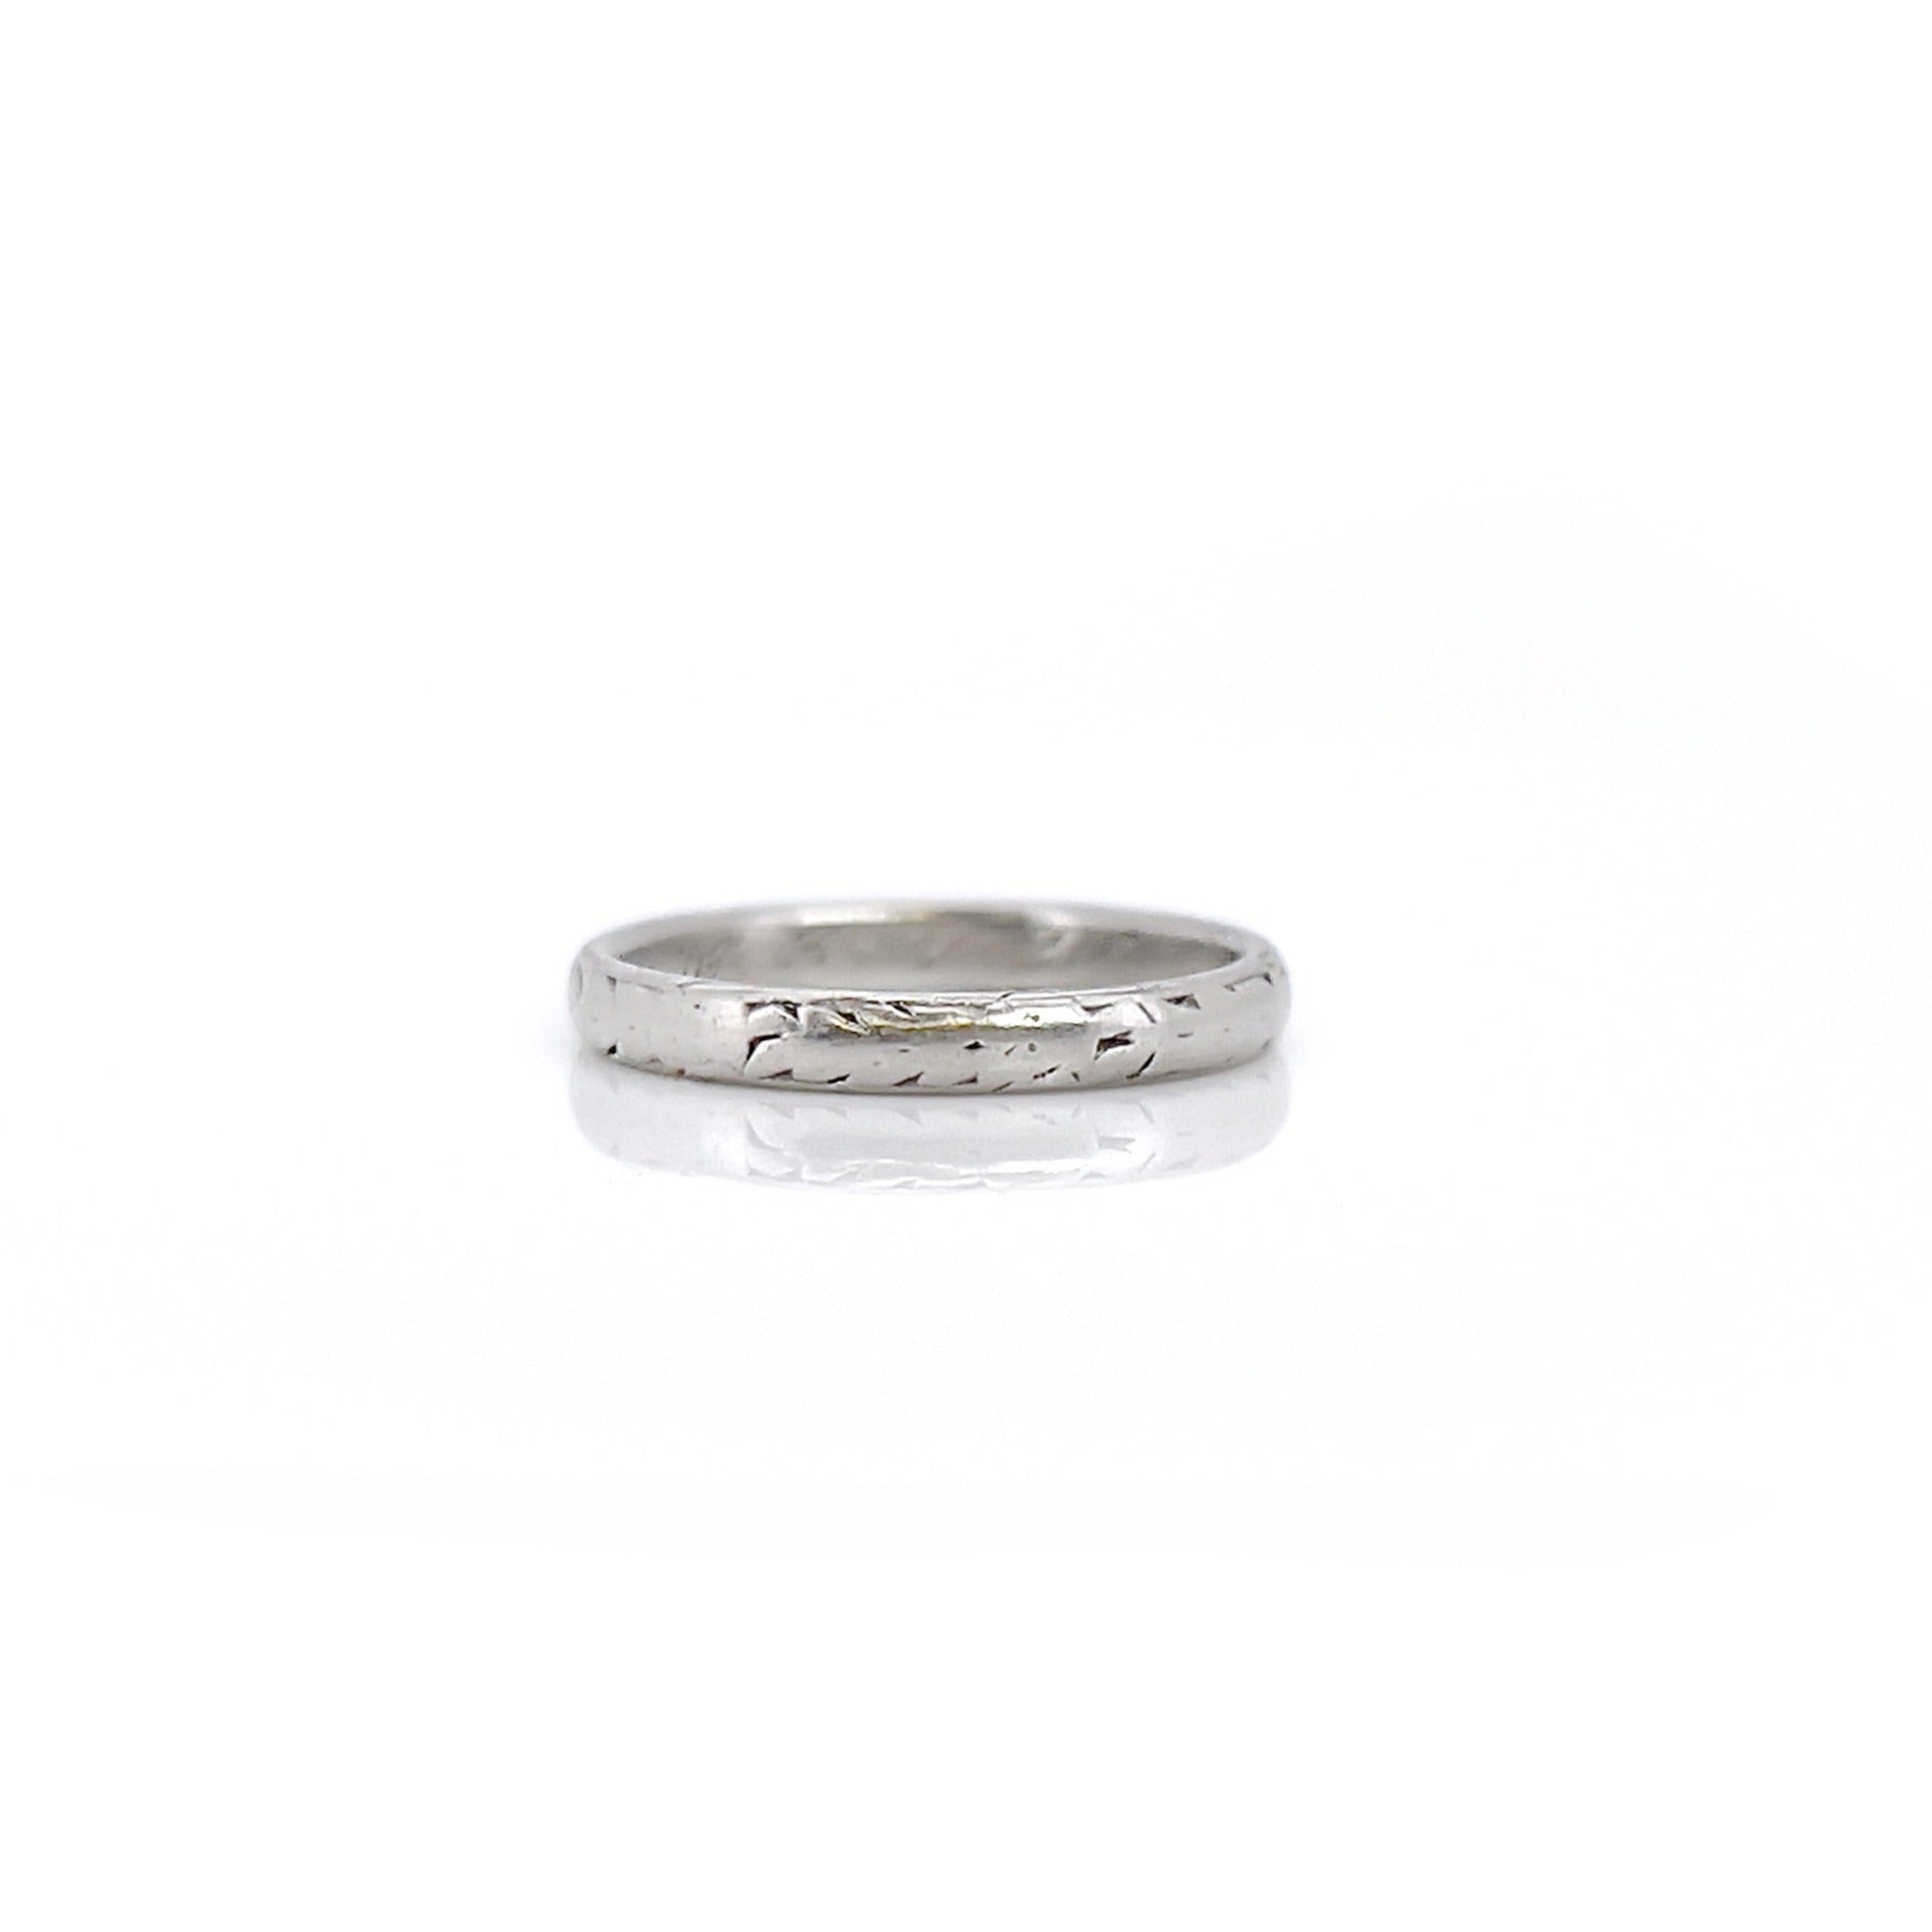 Art Deco, Platinum Wedding Ring, B.E.W. to M.B.K 3–7–20, Size 5.5